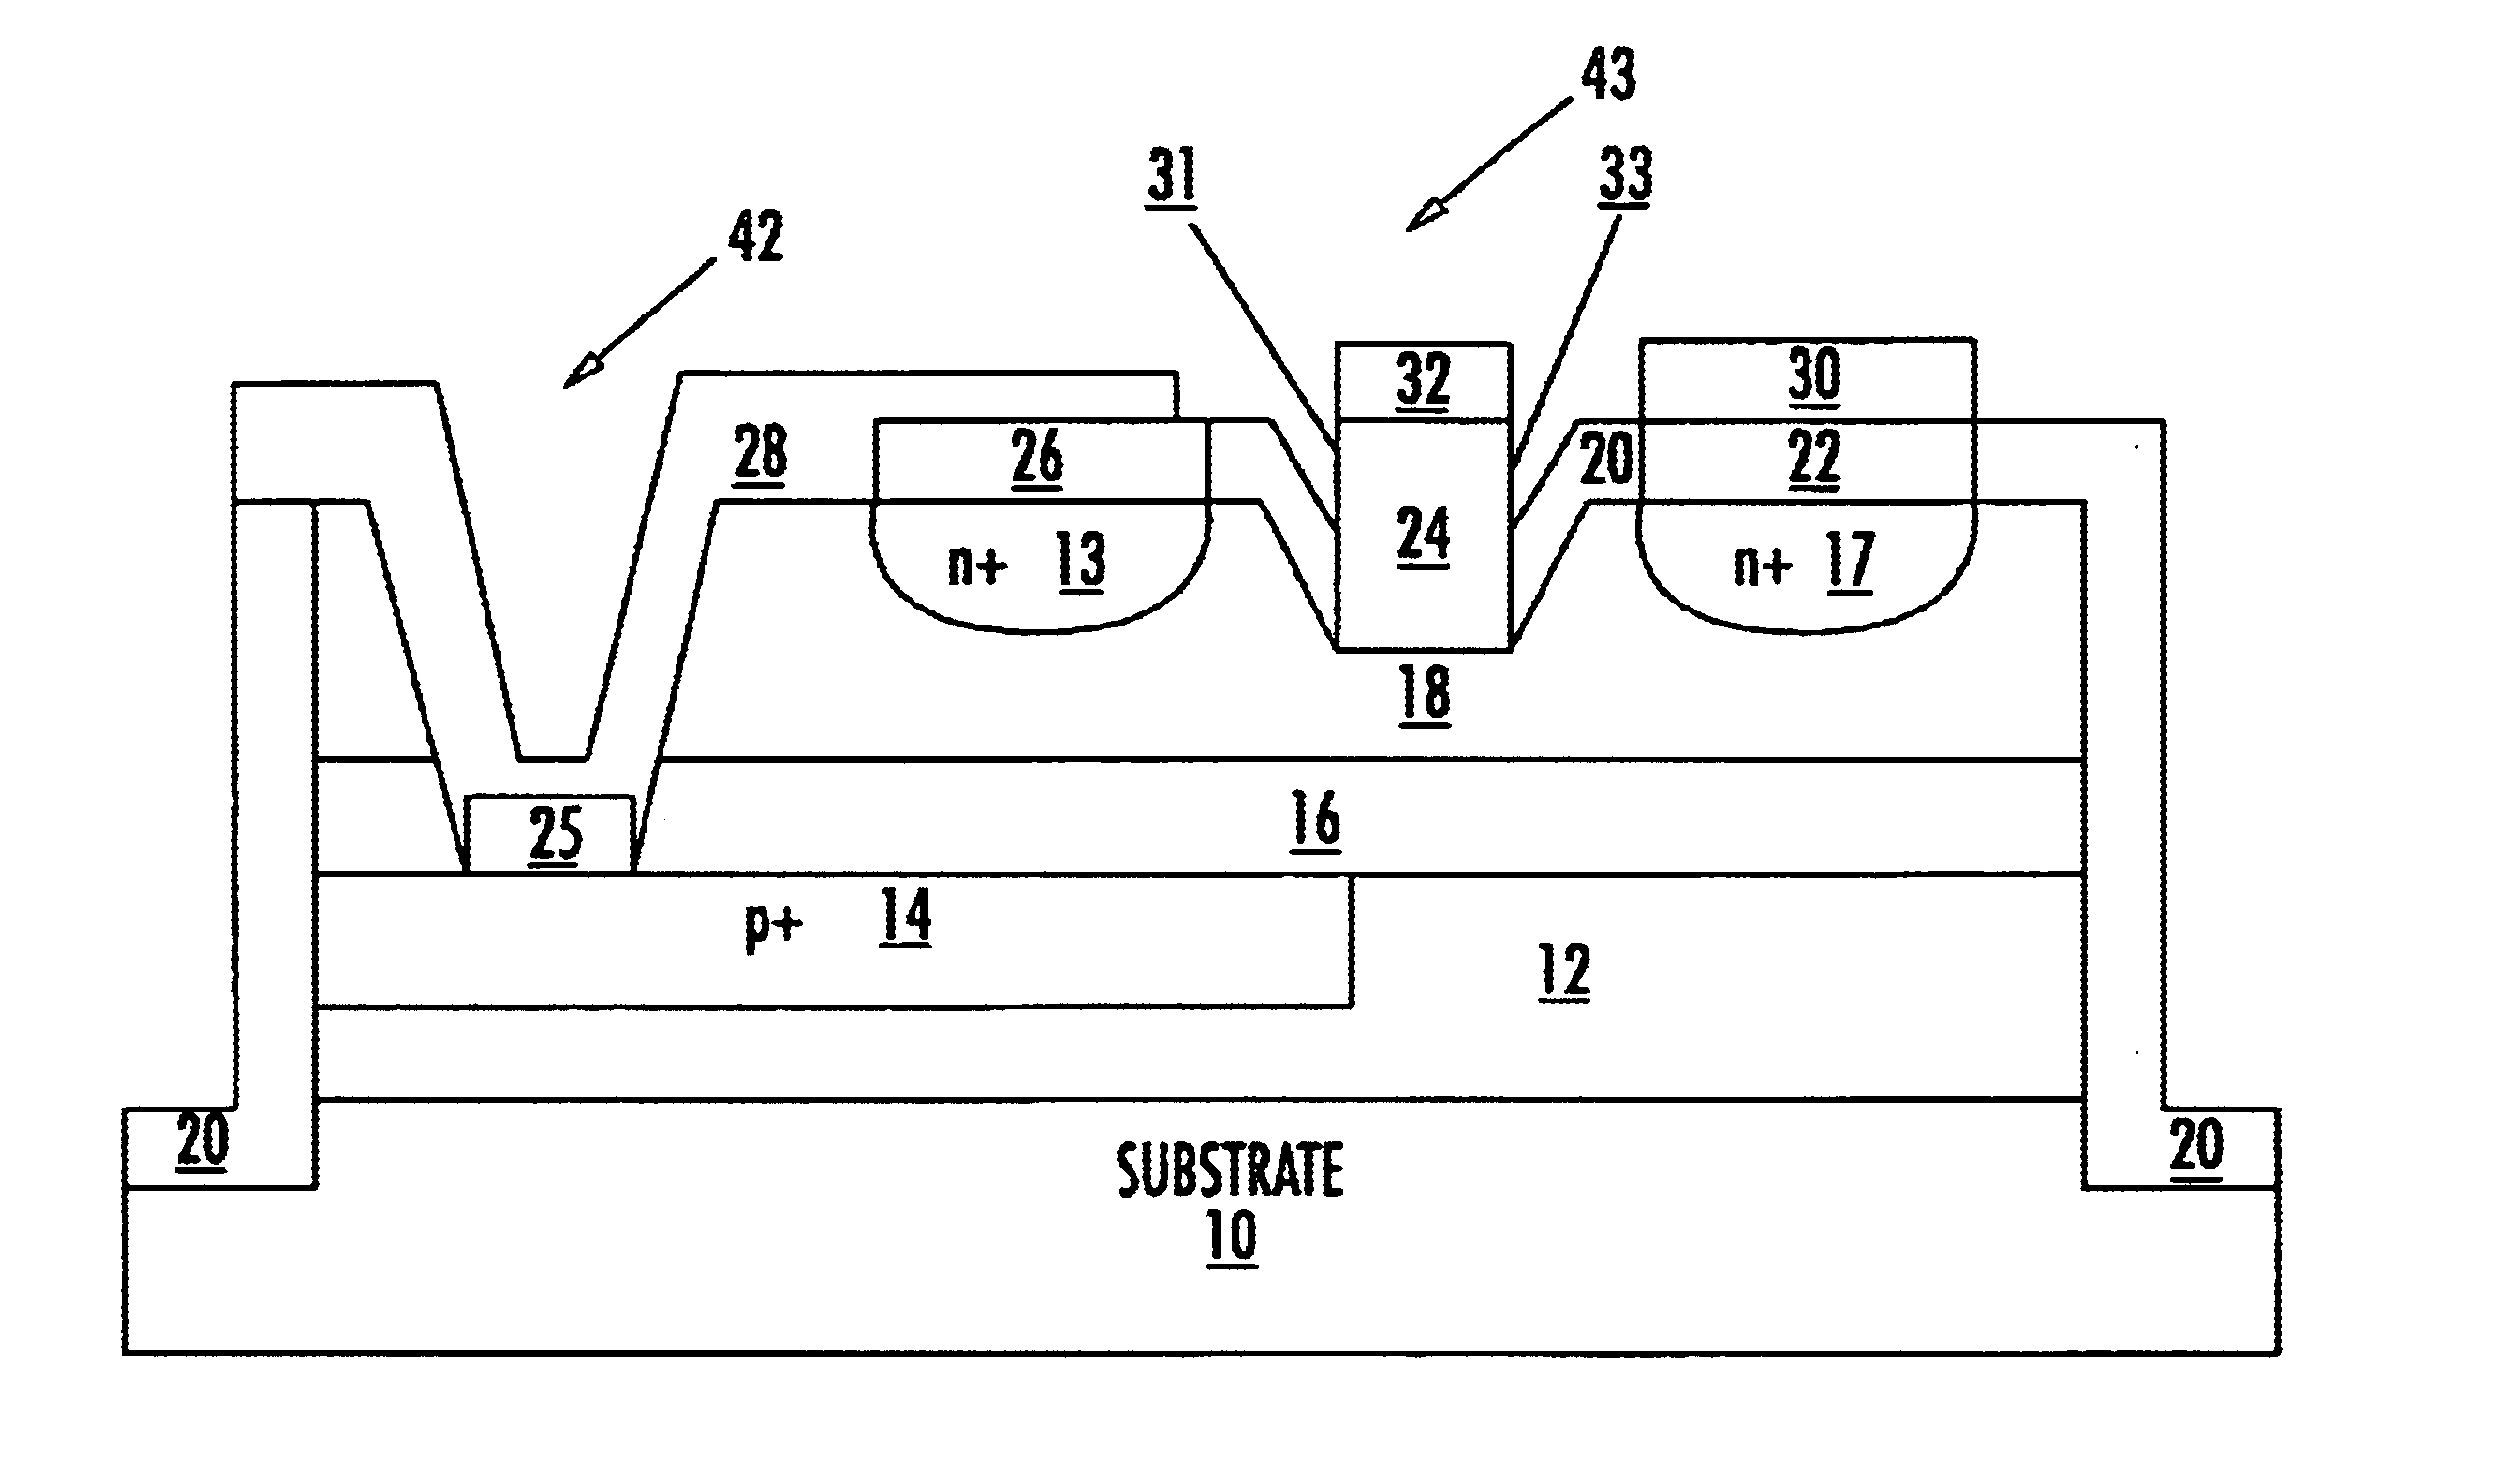 Transistors having buried p-type layers beneath the source region